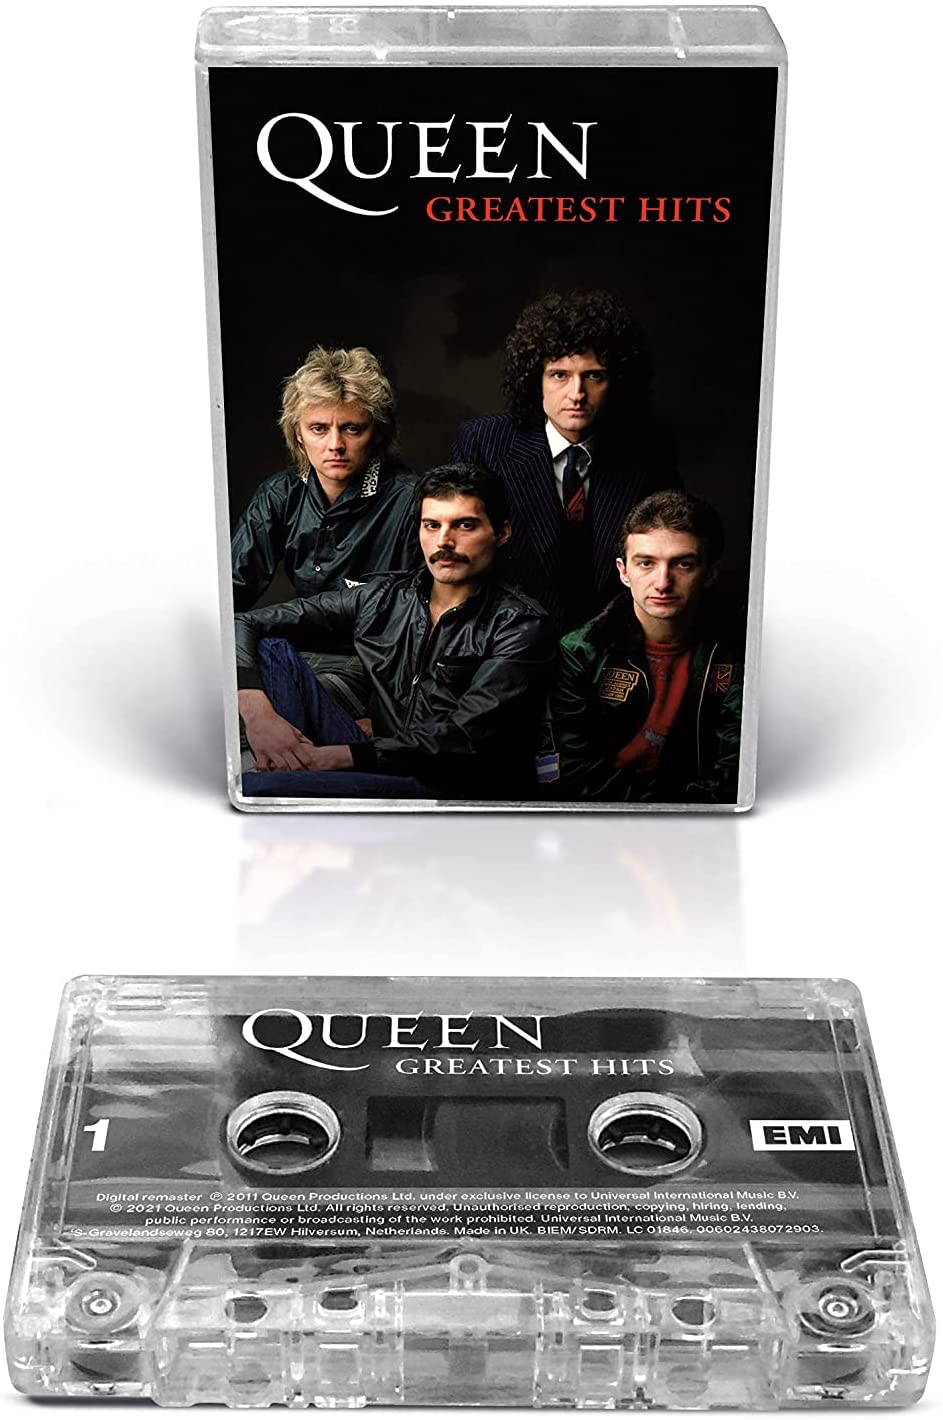 Queen Greatest Hits 2 кассета. Диск кассета Queen. Queen - Greatest Hits. Queen Greatest Hits 1. Greatest hits collection